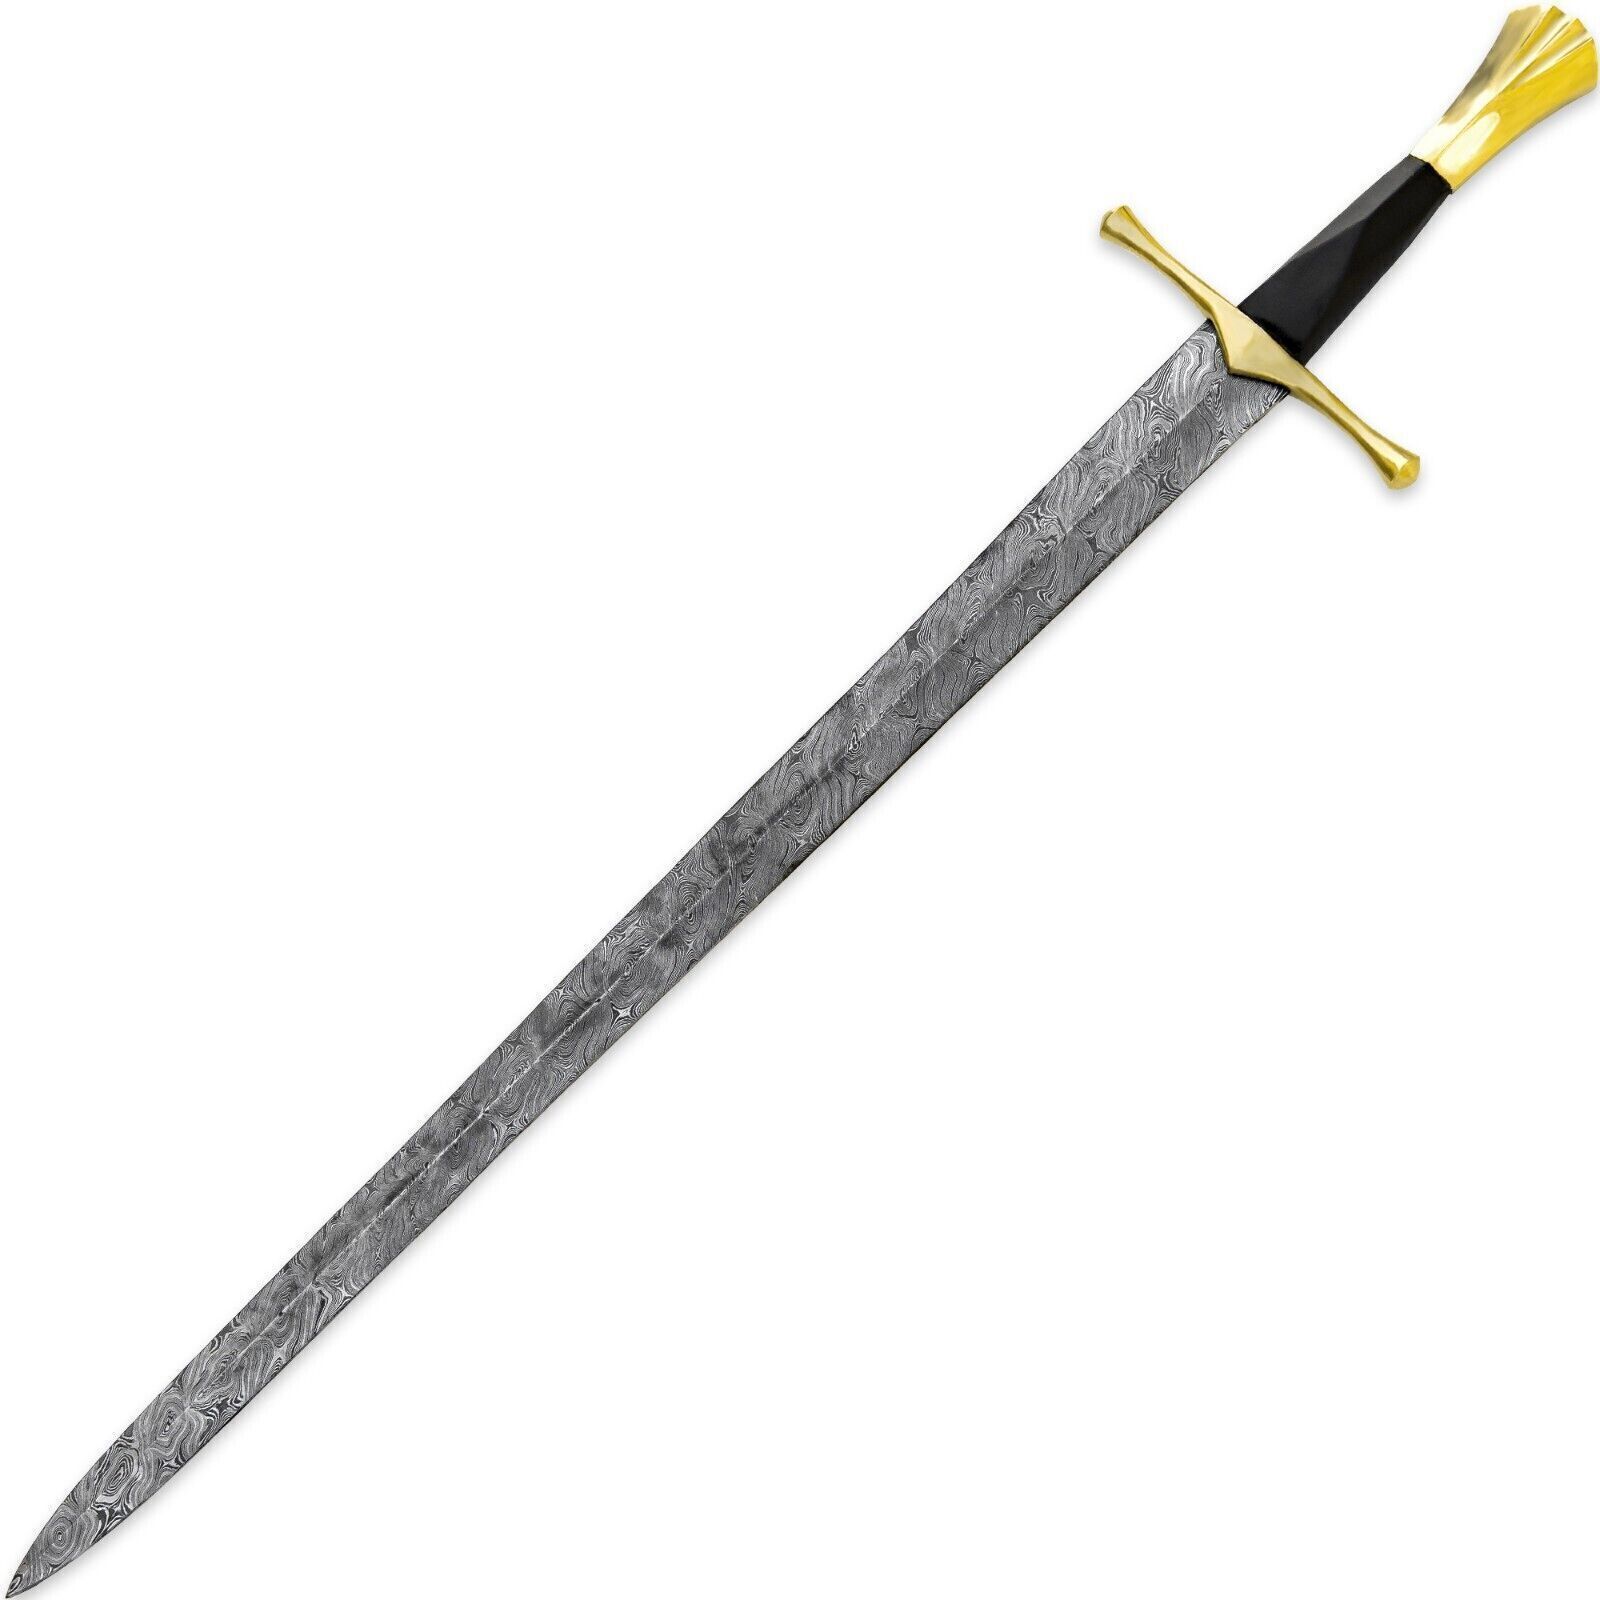 First Light Firestorm/Twist Damascus Sword | Forged Medieval Templar Style Sword